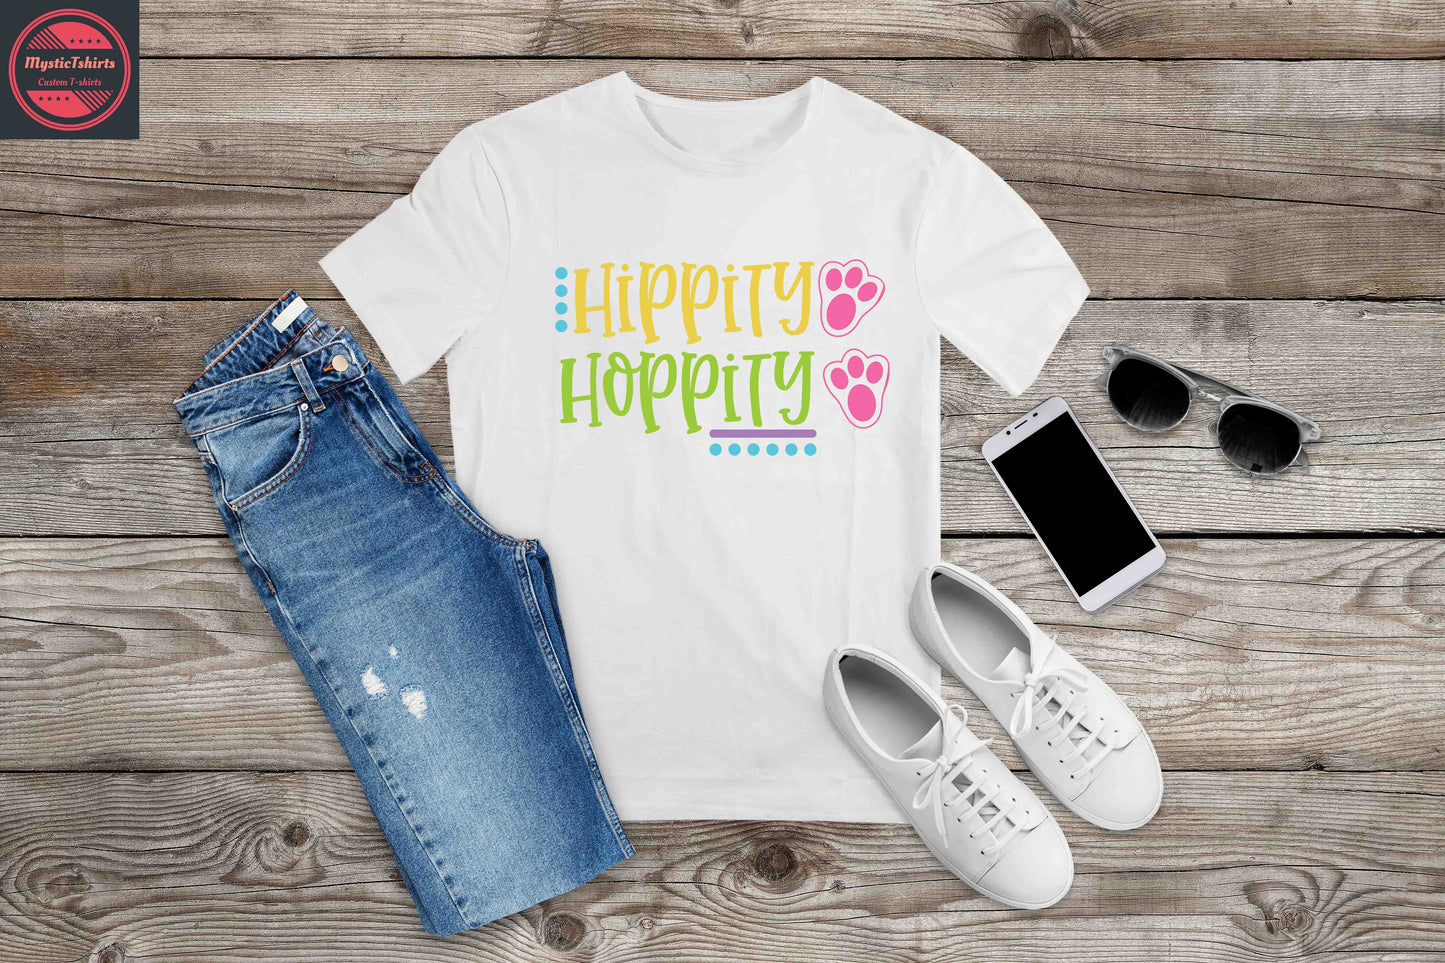 196. HIPPITY HOPPITY, Custom Made Shirt, Personalized T-Shirt, Custom Text, Make Your Own Shirt, Custom Tee